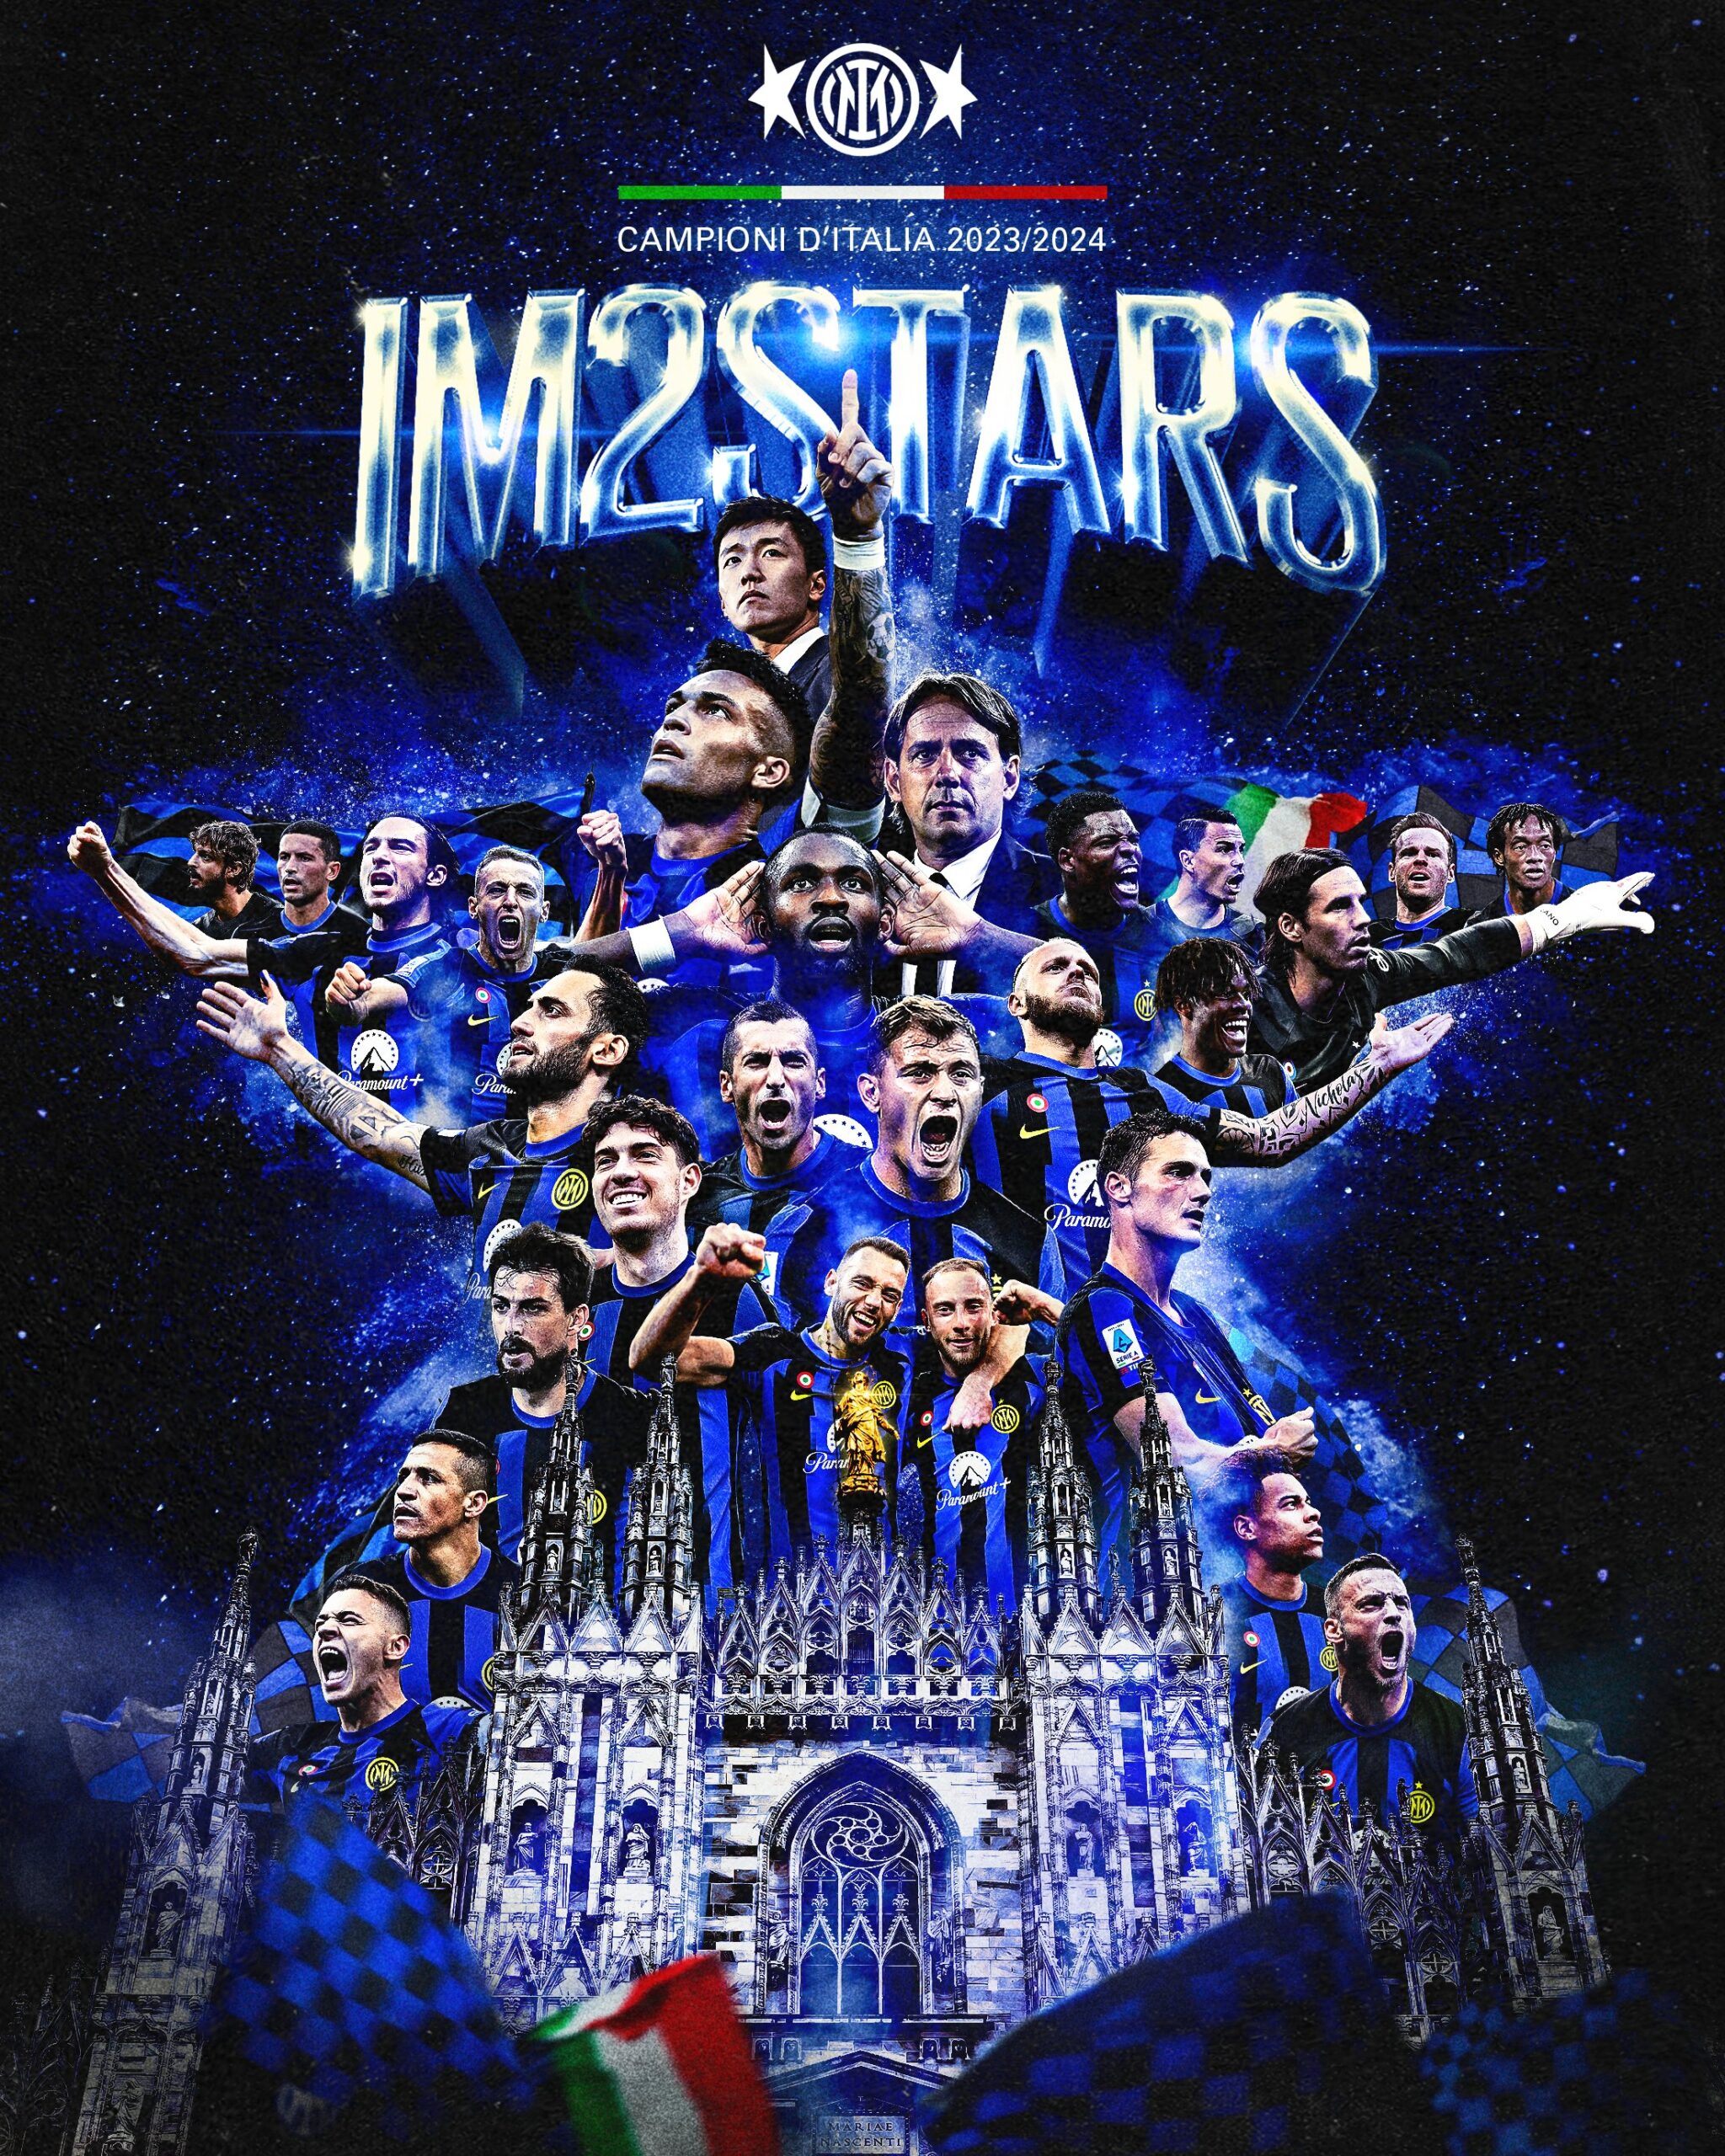 Inter Campione IM2STARS